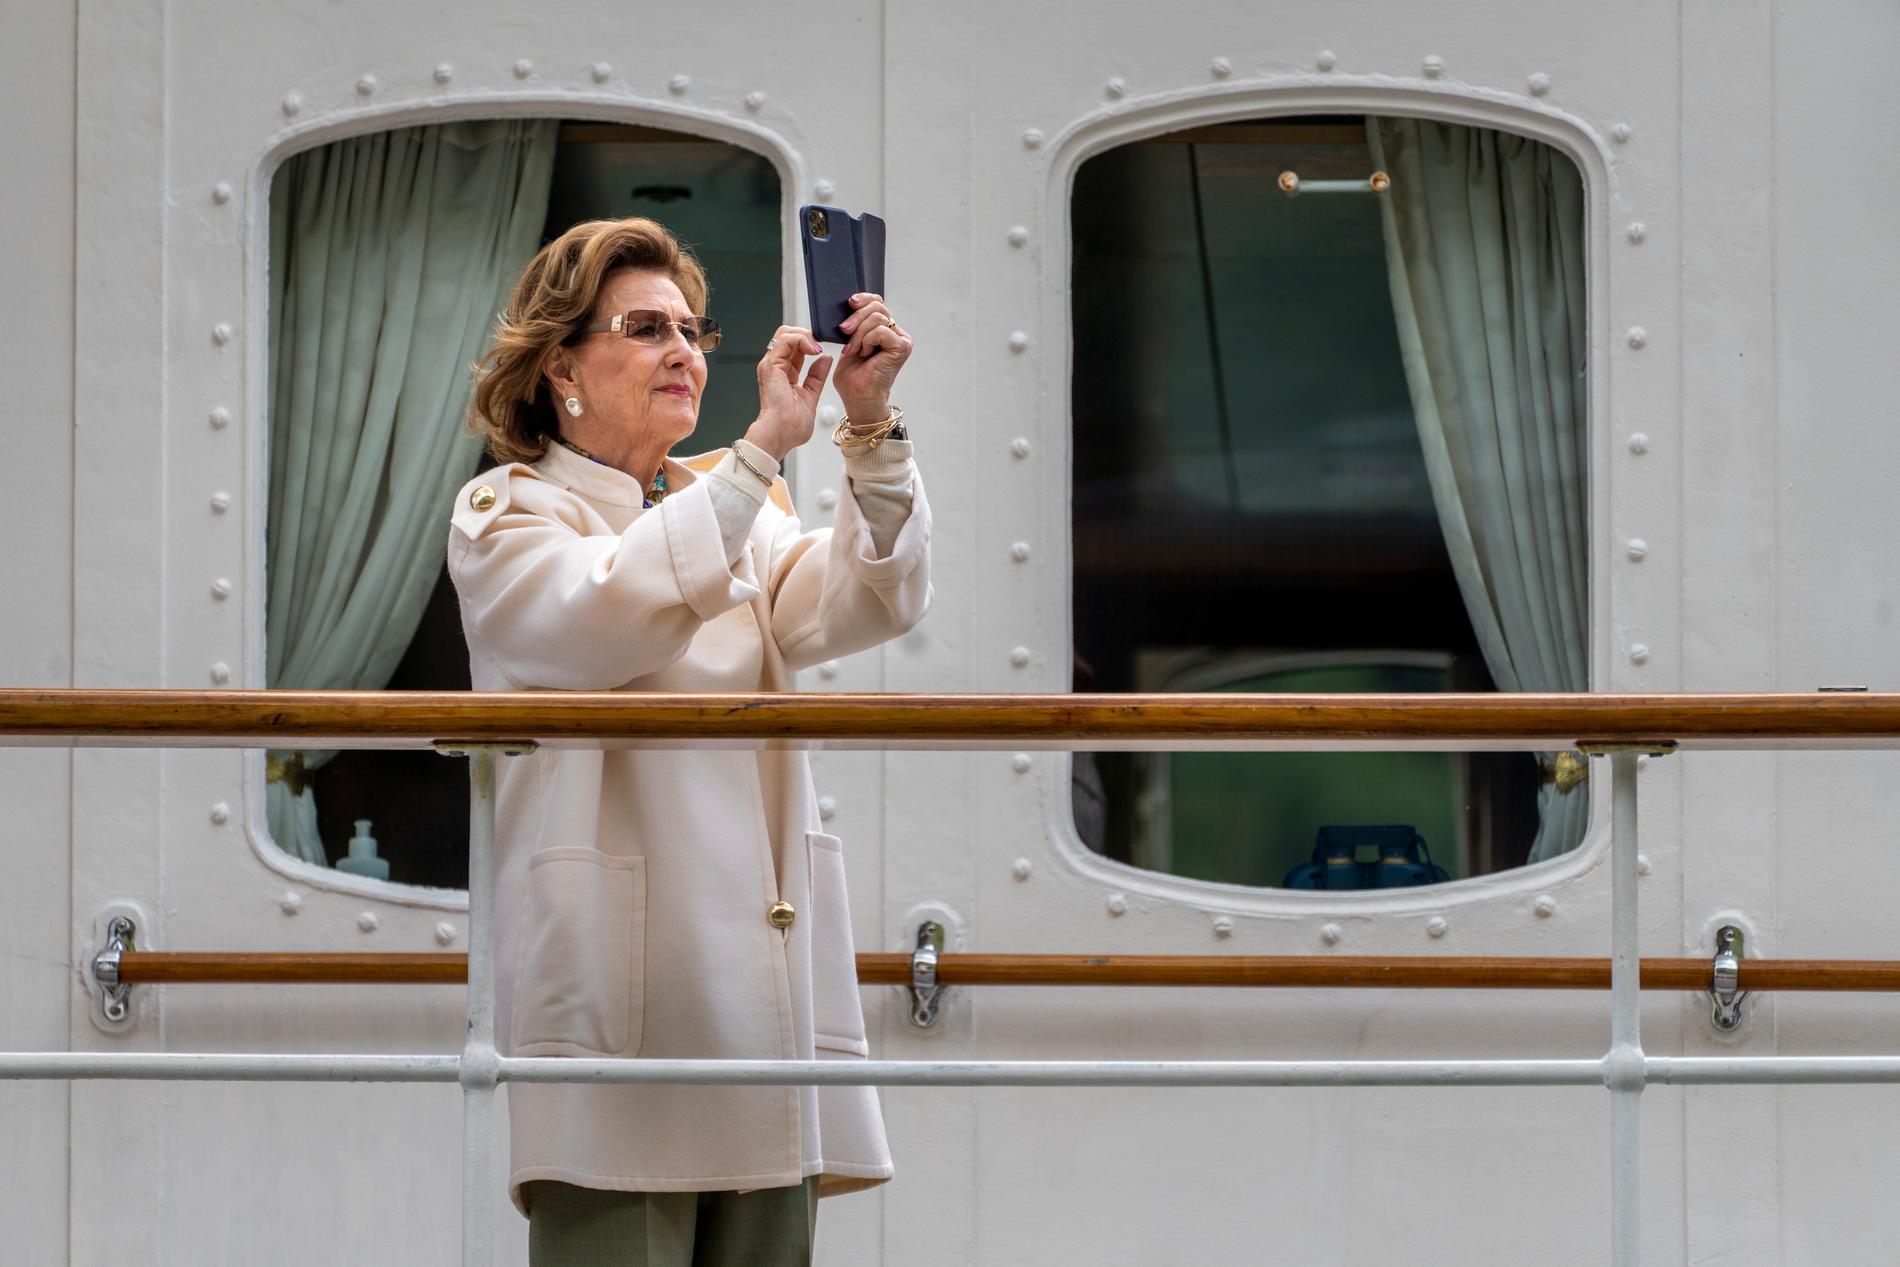 Dronning Sonja om bord på kongeskipet Norge tirsdag. Kongeparet er på en tredagers tur på Vestlandet.  